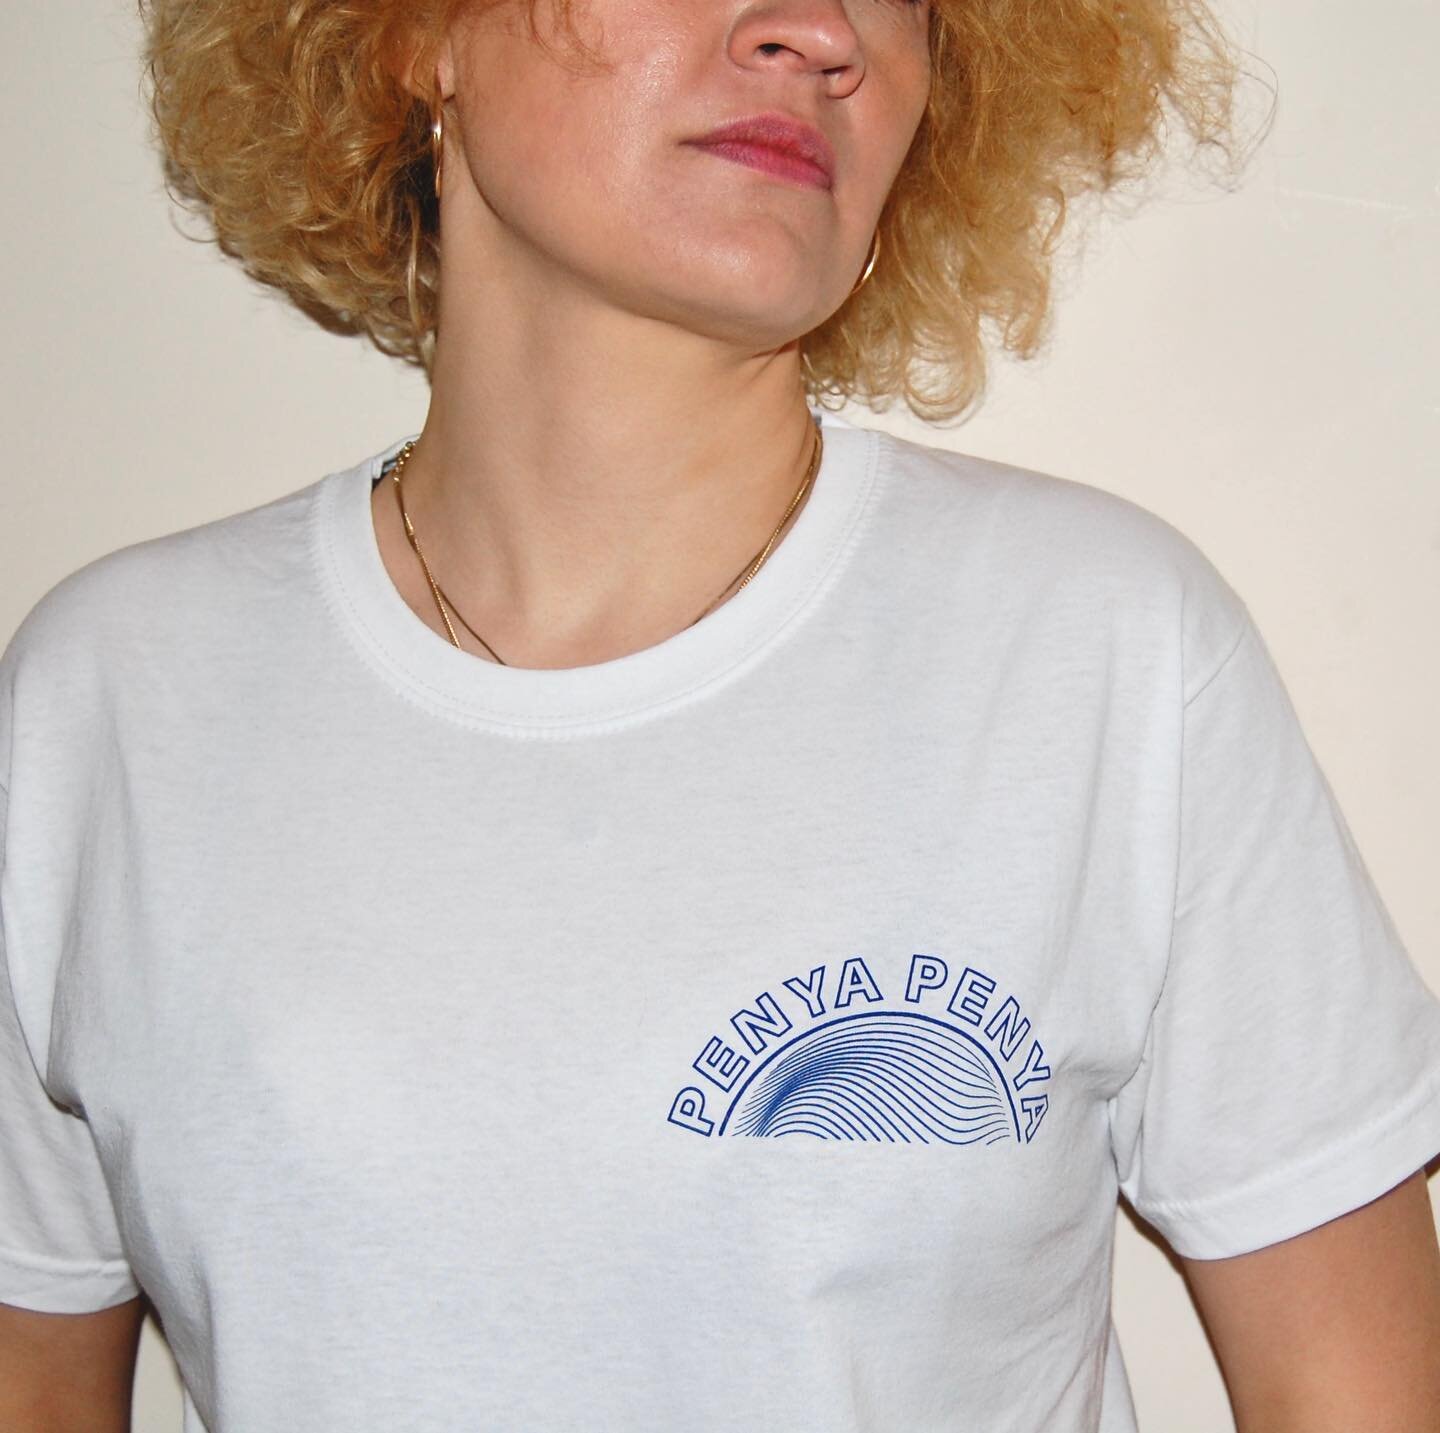 🚨 Merch alert‼️

❕ ｌｉｍｉｔｅｄ ｅｄｉｔｉｏｎ

❗️Penya____Penya t-shirt

🔅Available on our Bandcamp (link in bio)

🌀design by @brucassa 

.
.
.
#bandtshirt #merch #penyapenya #limitededition #blueandorange #whitetshirt #availablenow #liminal #supportindepend